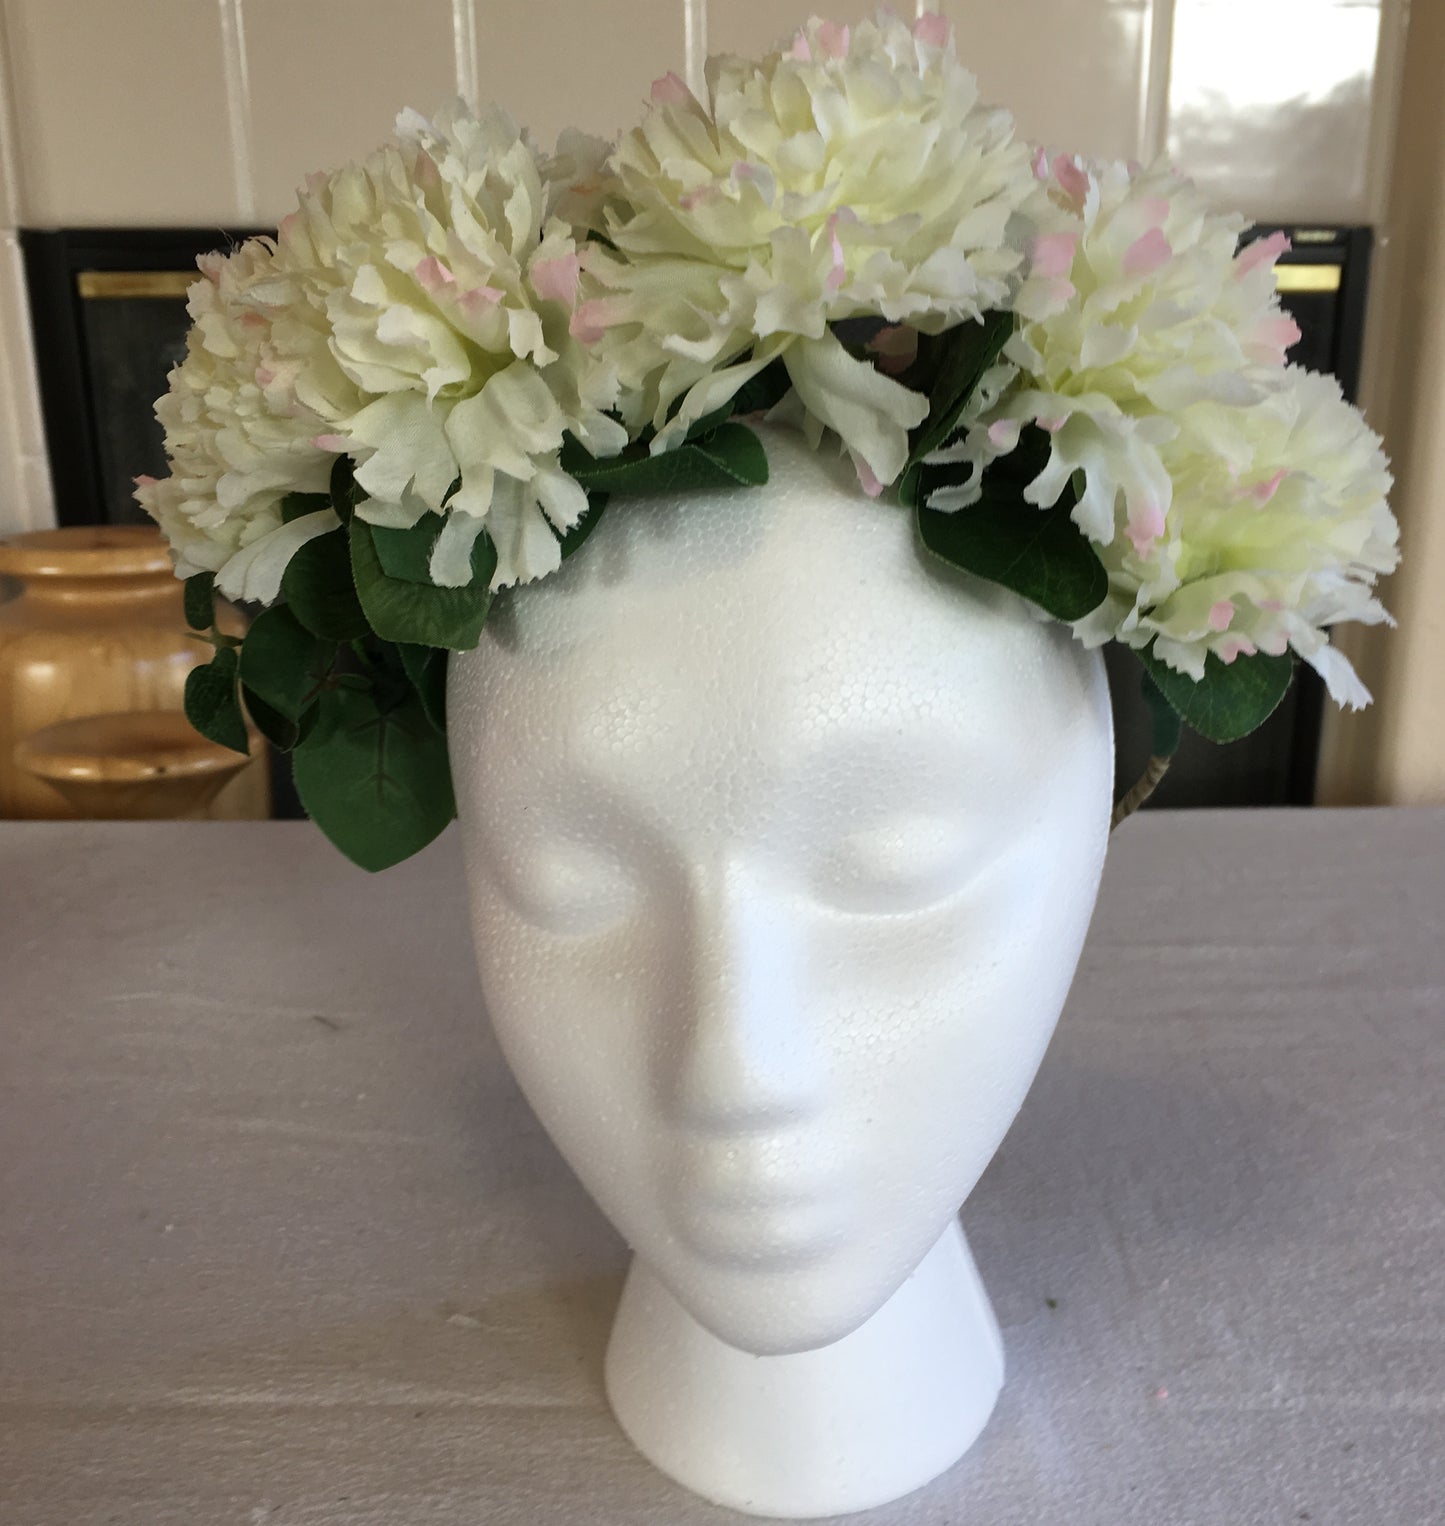 Medium Wreath - White carnations